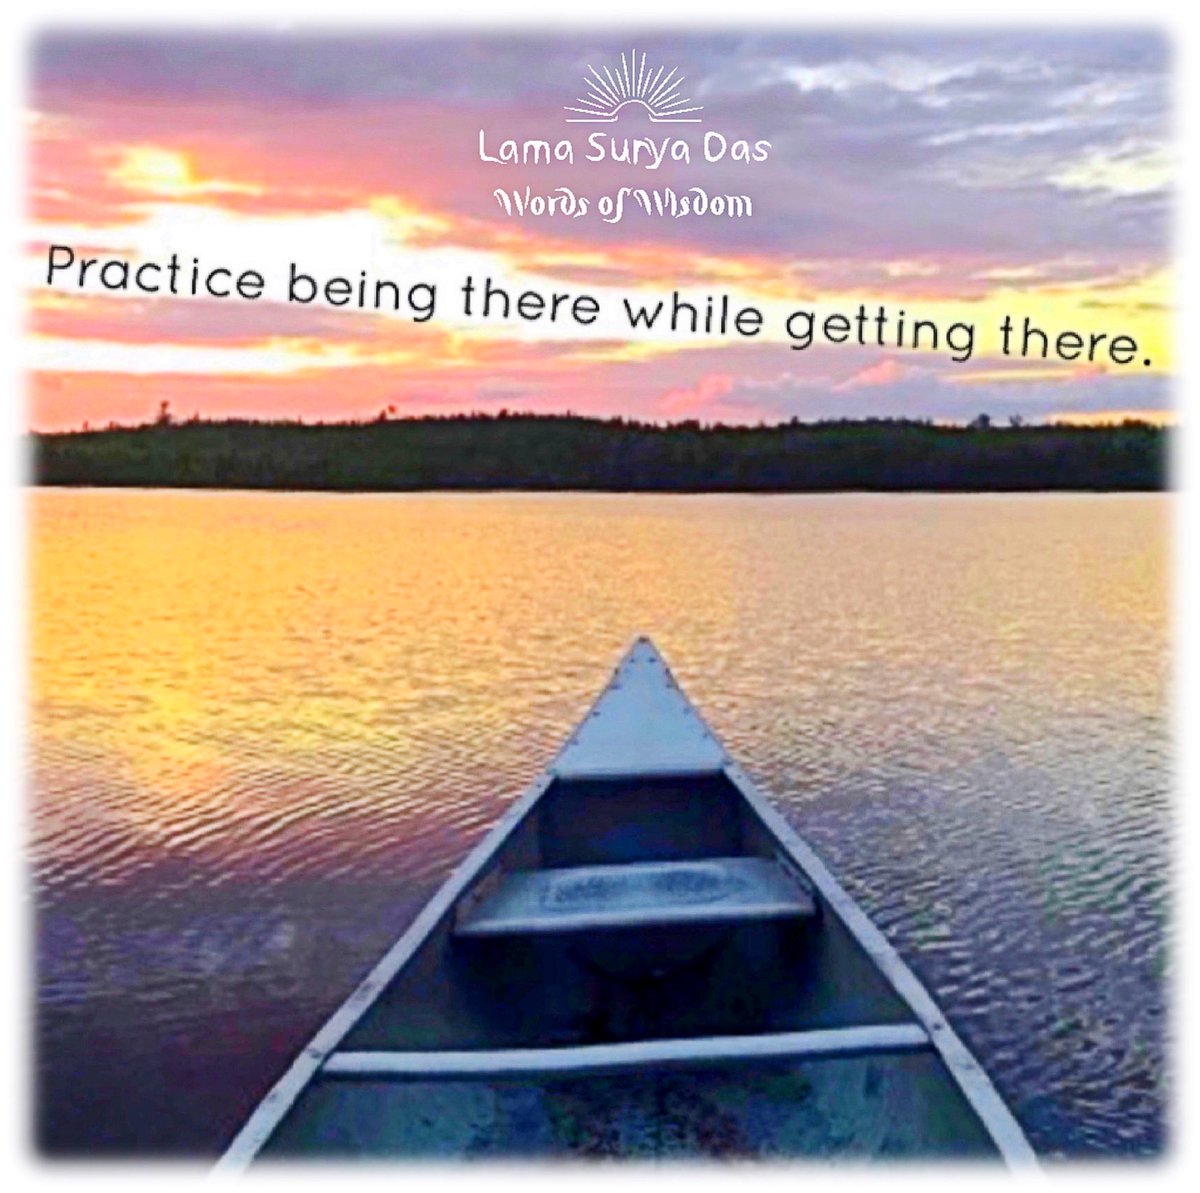 Practice being there while getting there. ~Lama Surya Das

#LamaSuryaDas #Dzogchen #Meditation  #Mindfulness #SelfInquiry #NonDual  #Buddhism #Healing #Wellness #Yoga  #Dharma #AwakeningtheBuddhaWithin #HowtoHeal